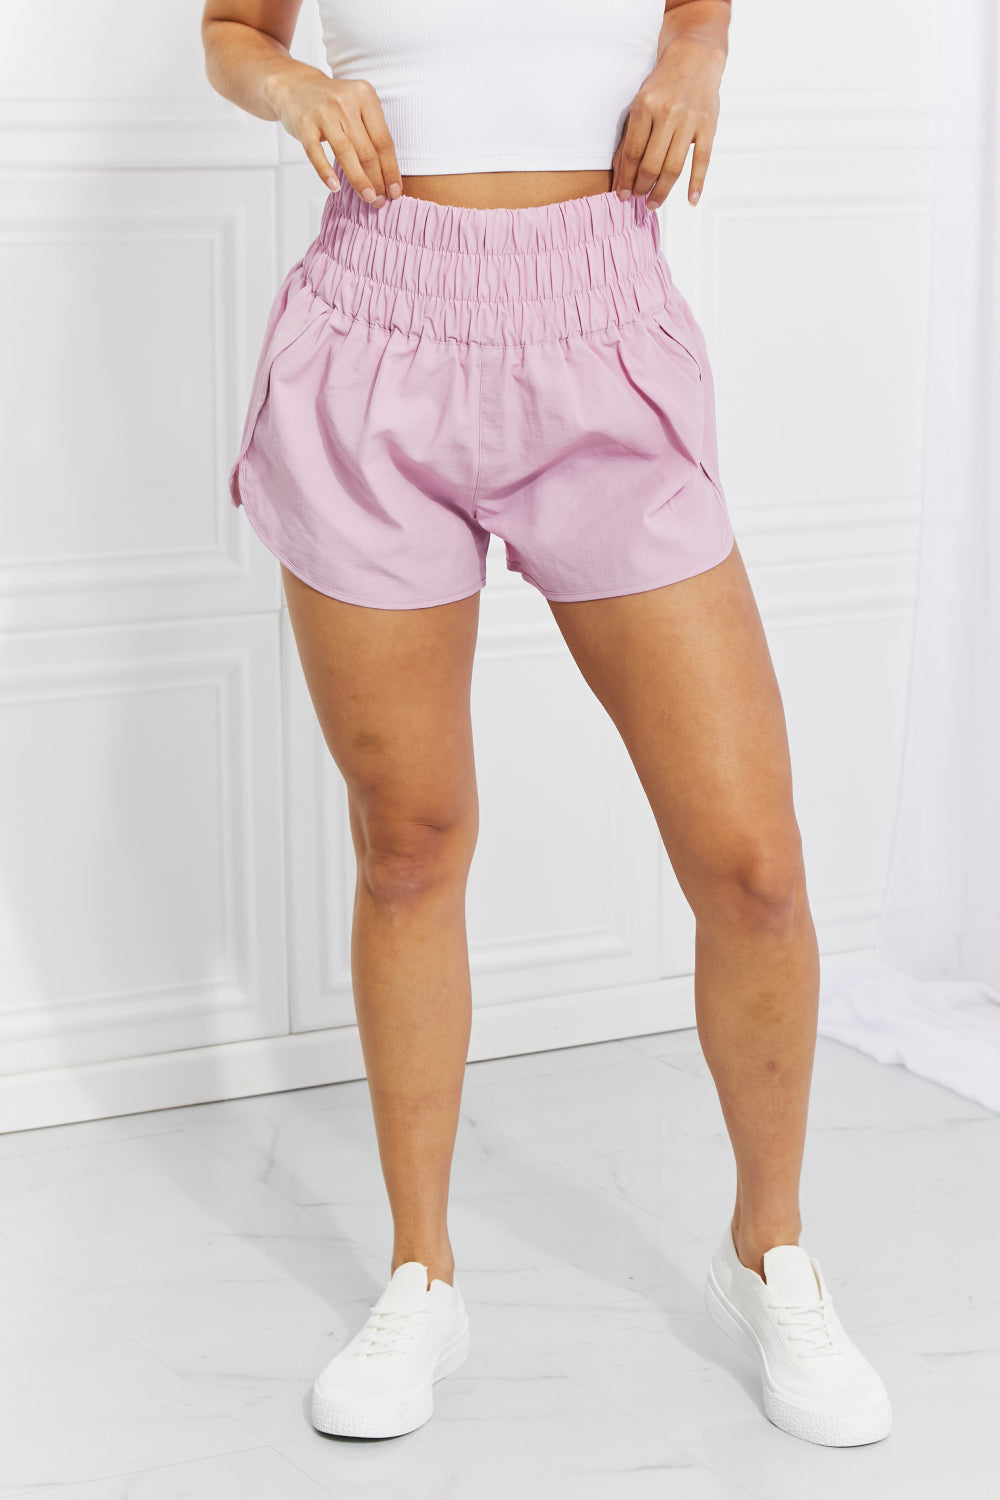 Zenana Cross Country Smocked Waist Running Shorts in Pink